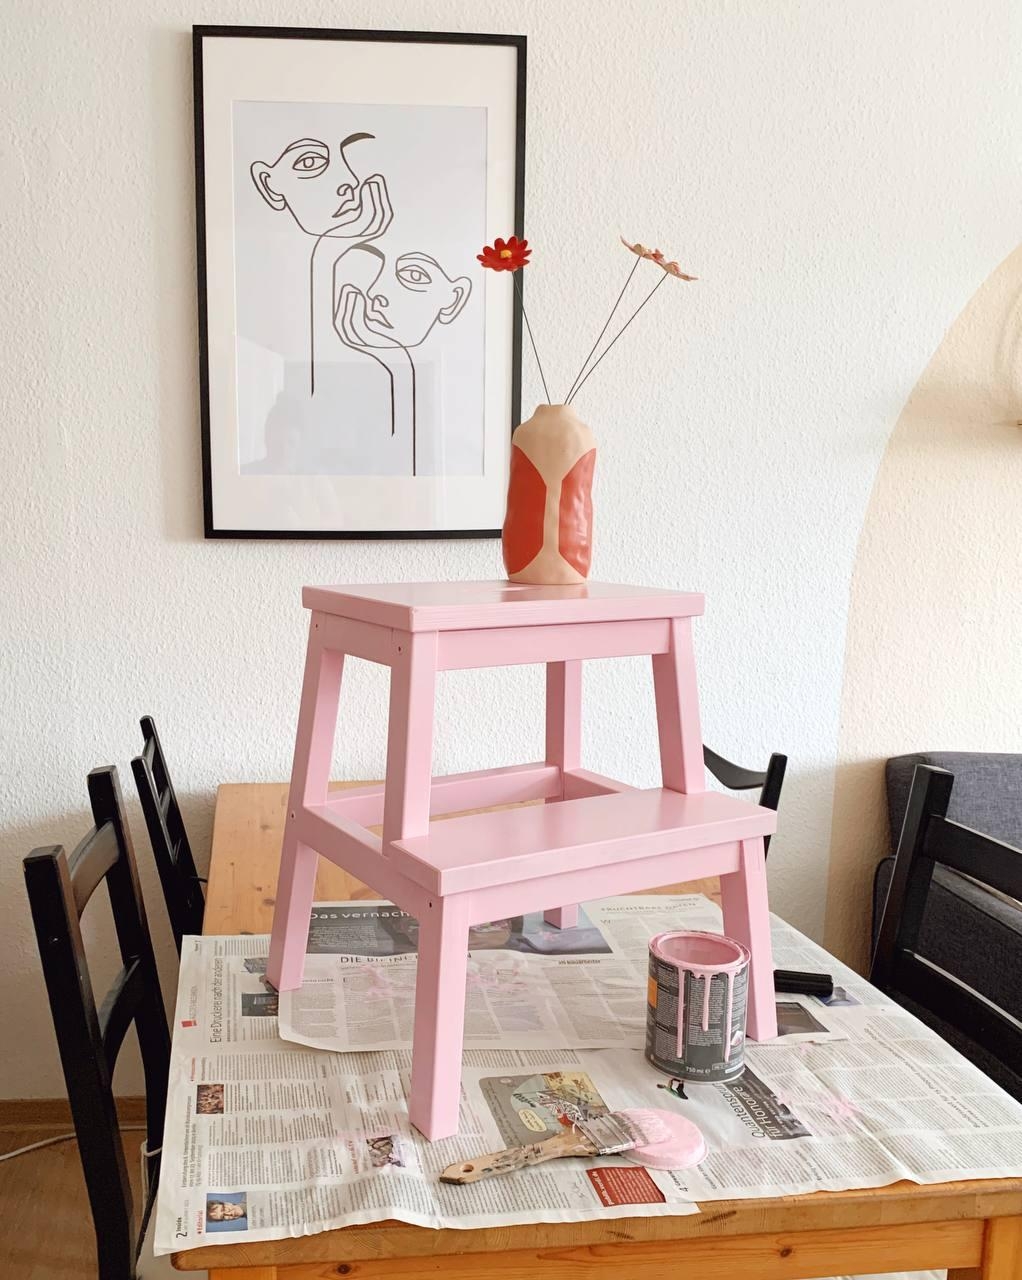 kleines DIY-Projekt mit neuer Farbe, passend zum Frühling #rosa #frühlingsfarben #ikeahack #upcycling